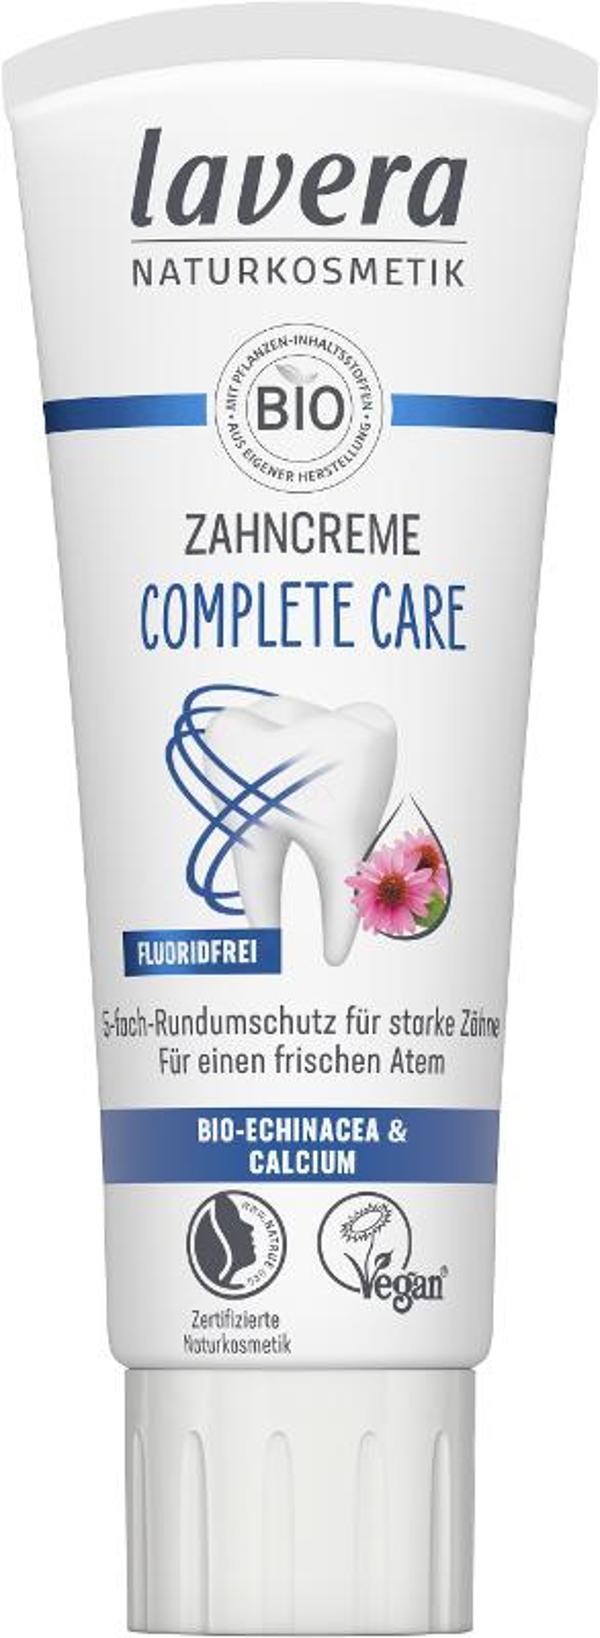 Produktfoto zu basis Zahncreme complete care